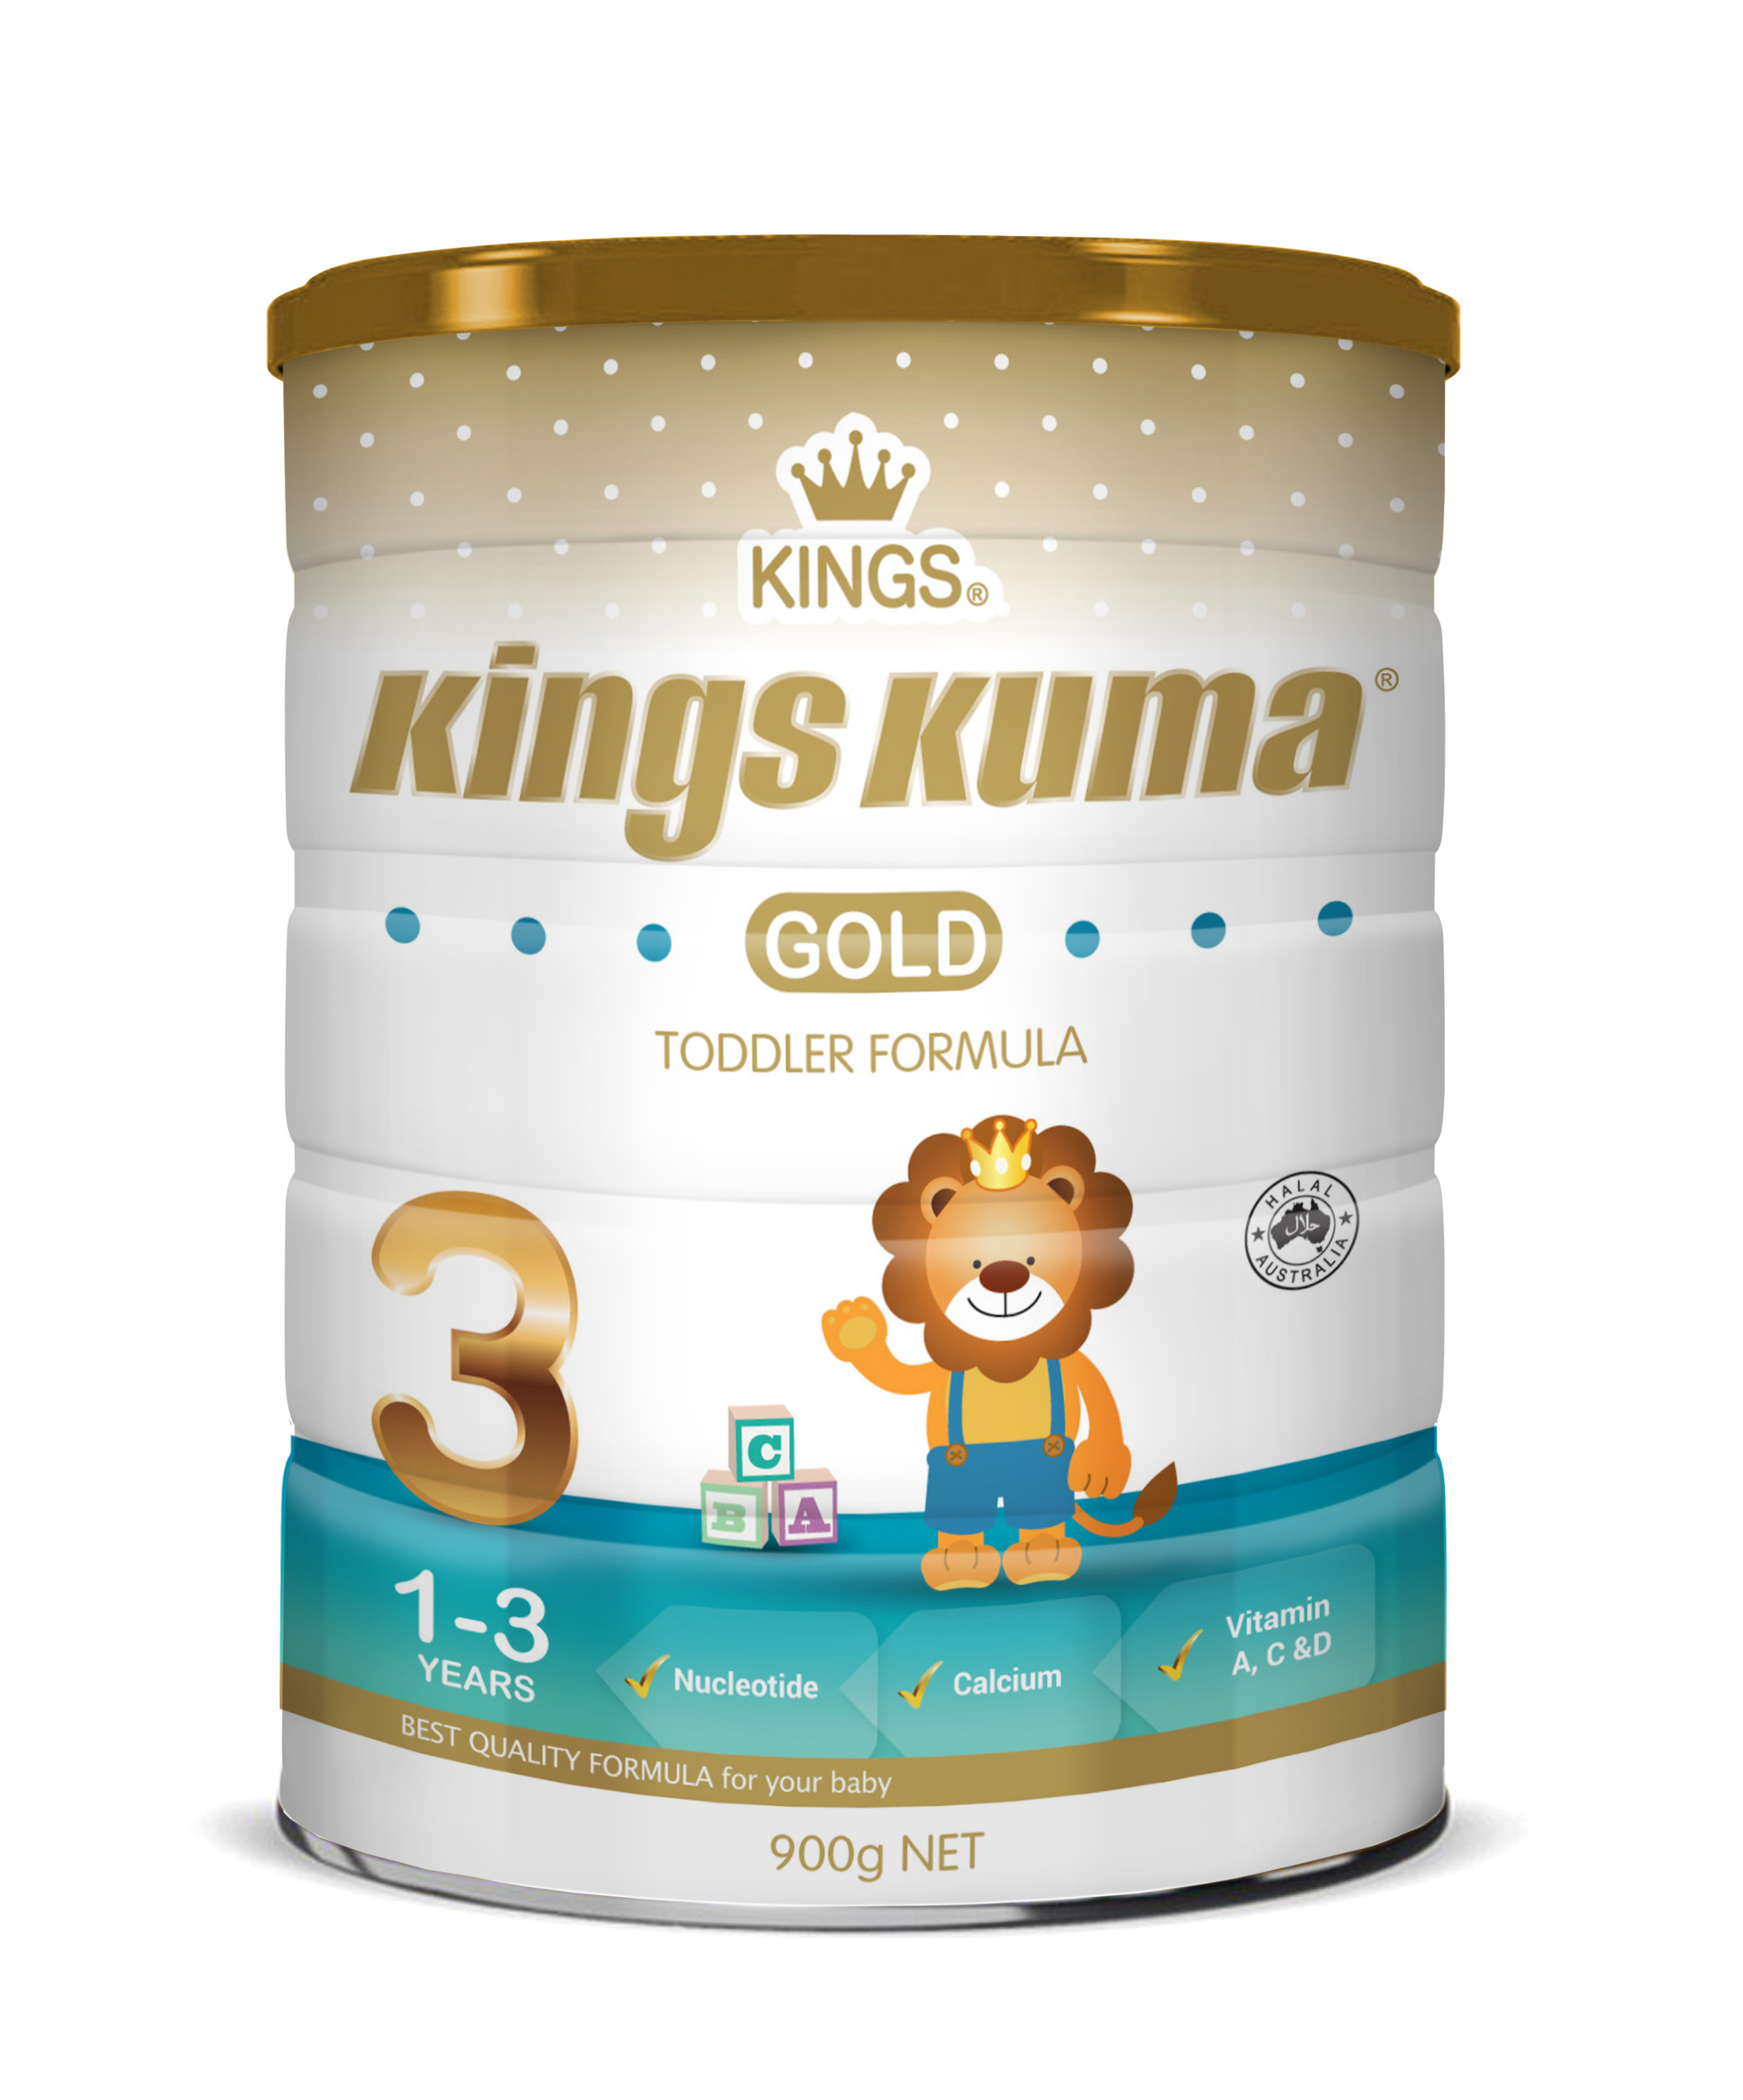 KINGS KUMA Infant Formula Step 3 (1-3 years old)